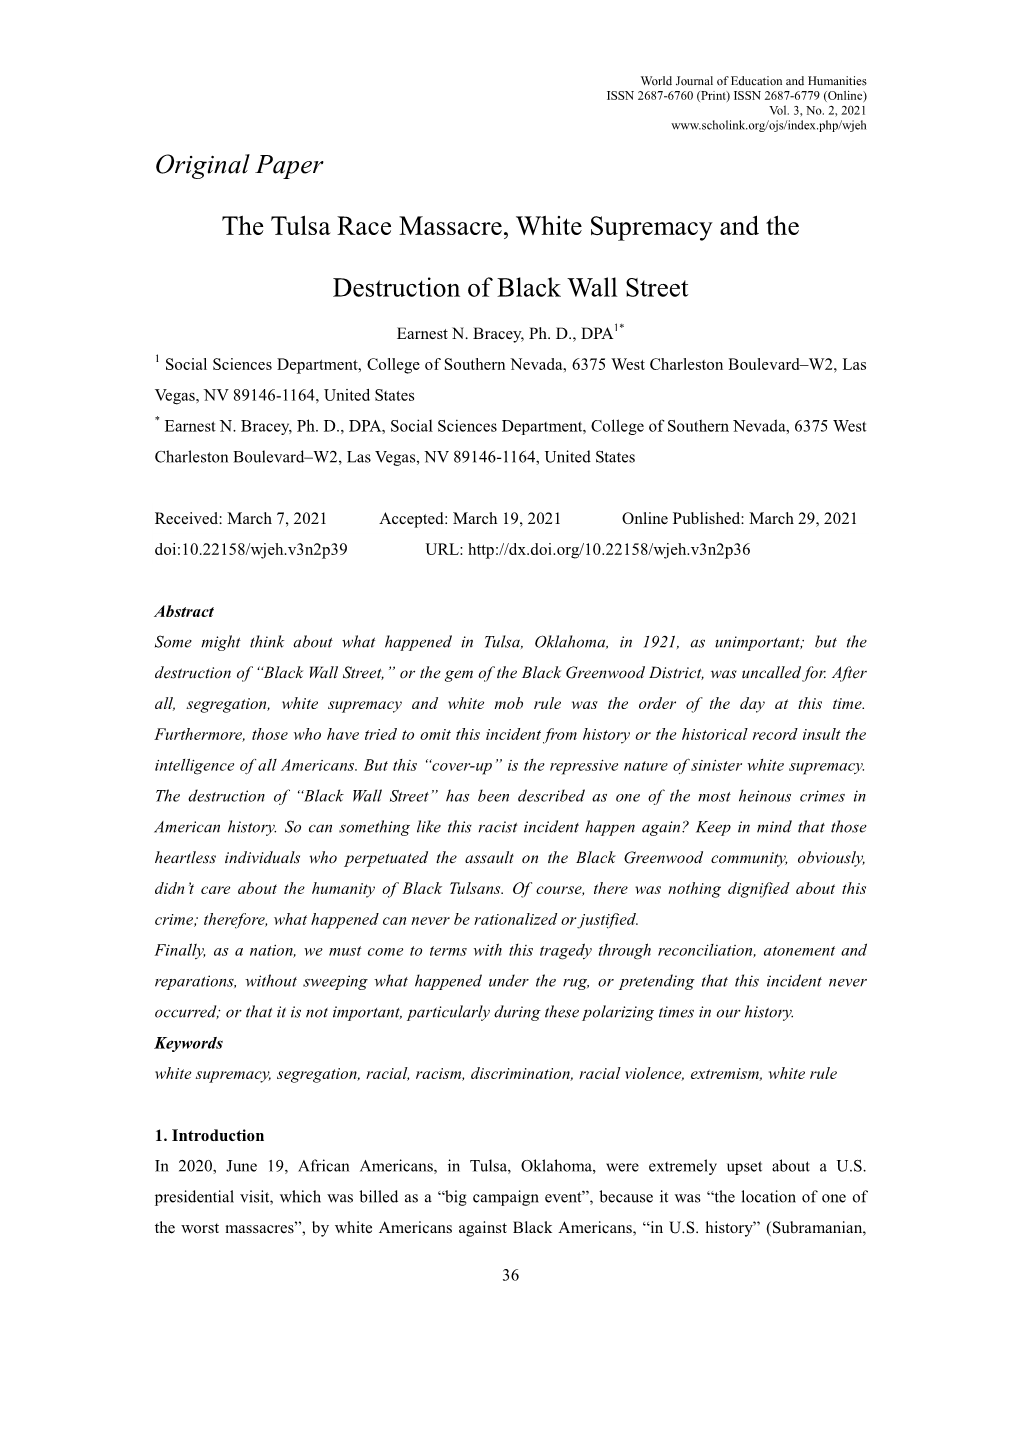 Original Paper the Tulsa Race Massacre, White Supremacy and the Destruction of Black Wall Street